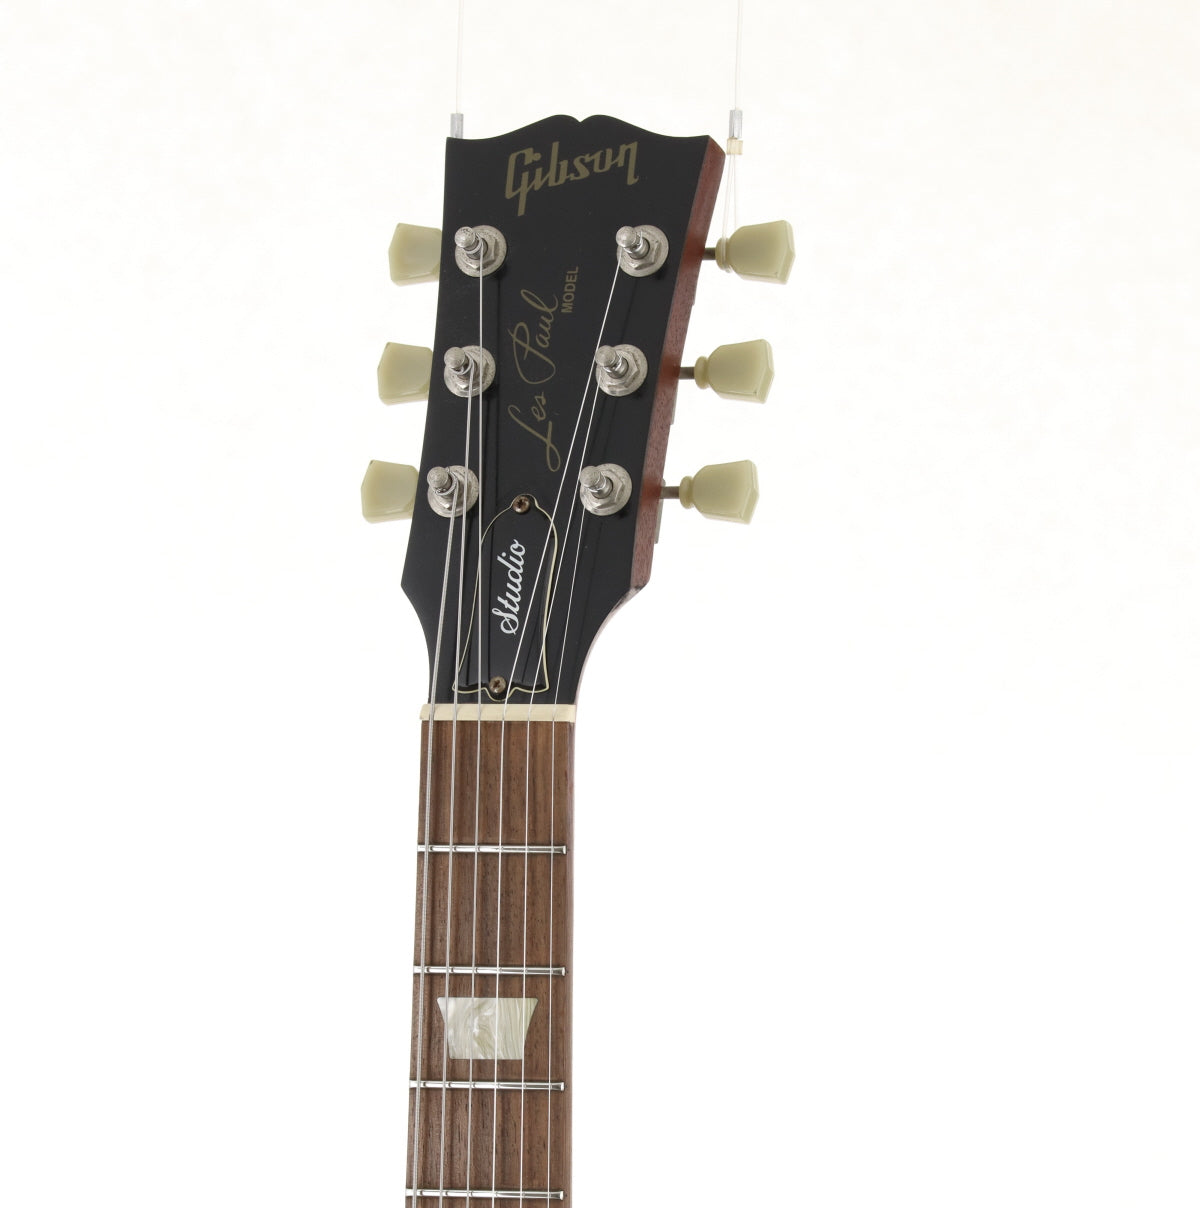 [SN 000360466] USED Gibson / Les Paul Studio Faded Worn Cherry [06]